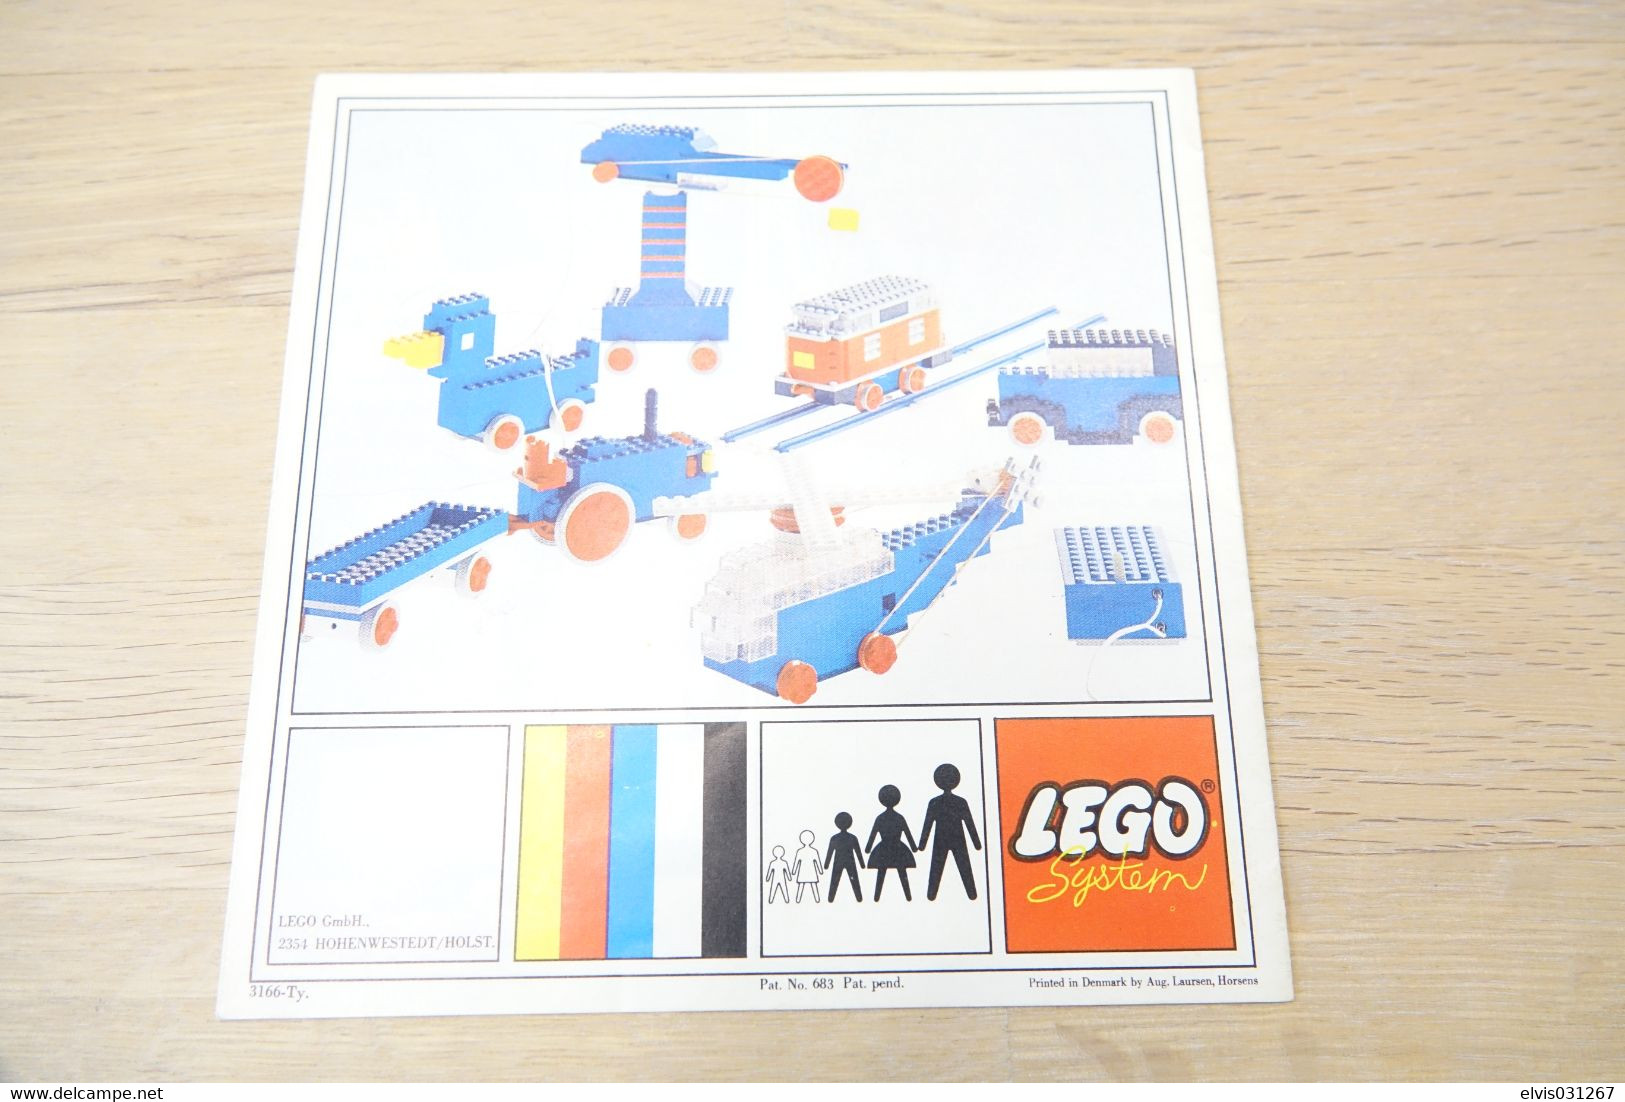 LEGO - Information Book 1966 Mit Dem Lego-Motor Bauen (3166-Ty) - Original Vintage Lego - 1966 - Catalogues